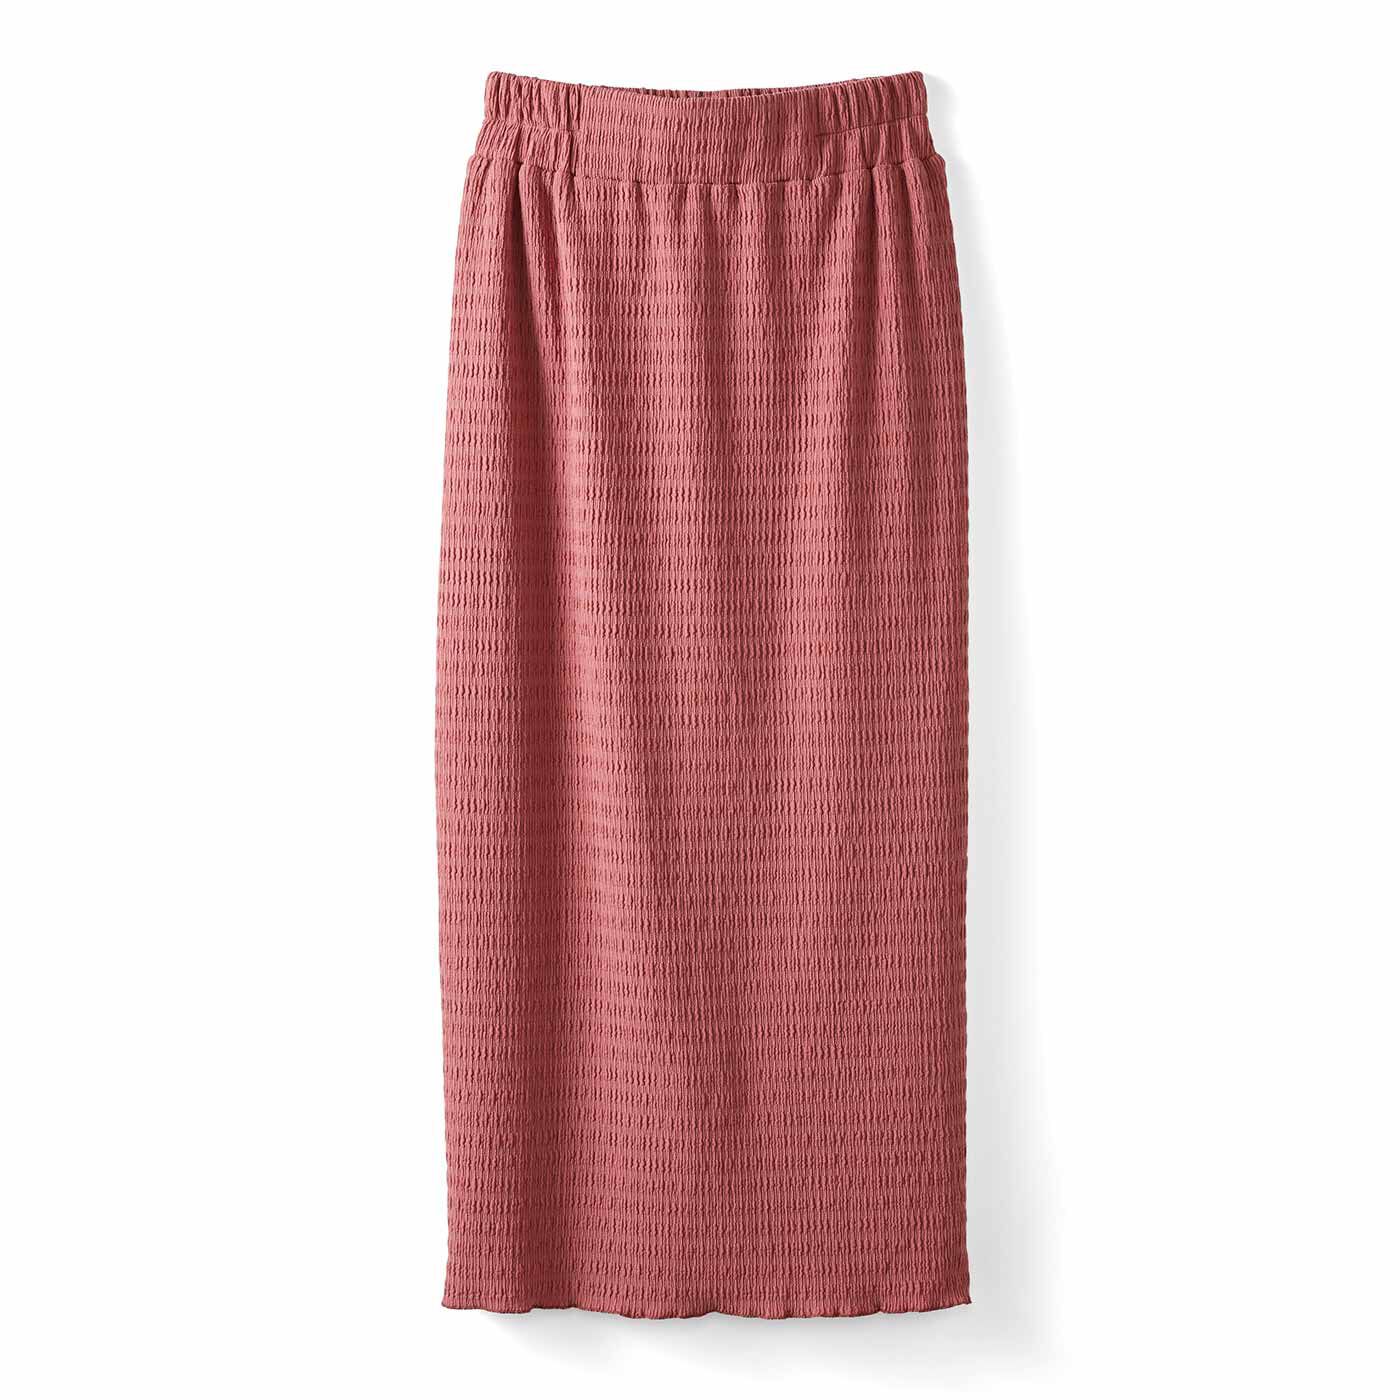 IEDIT | ふくれ ジャカード カットソー素材 Iライン スカート〈ピンク〉